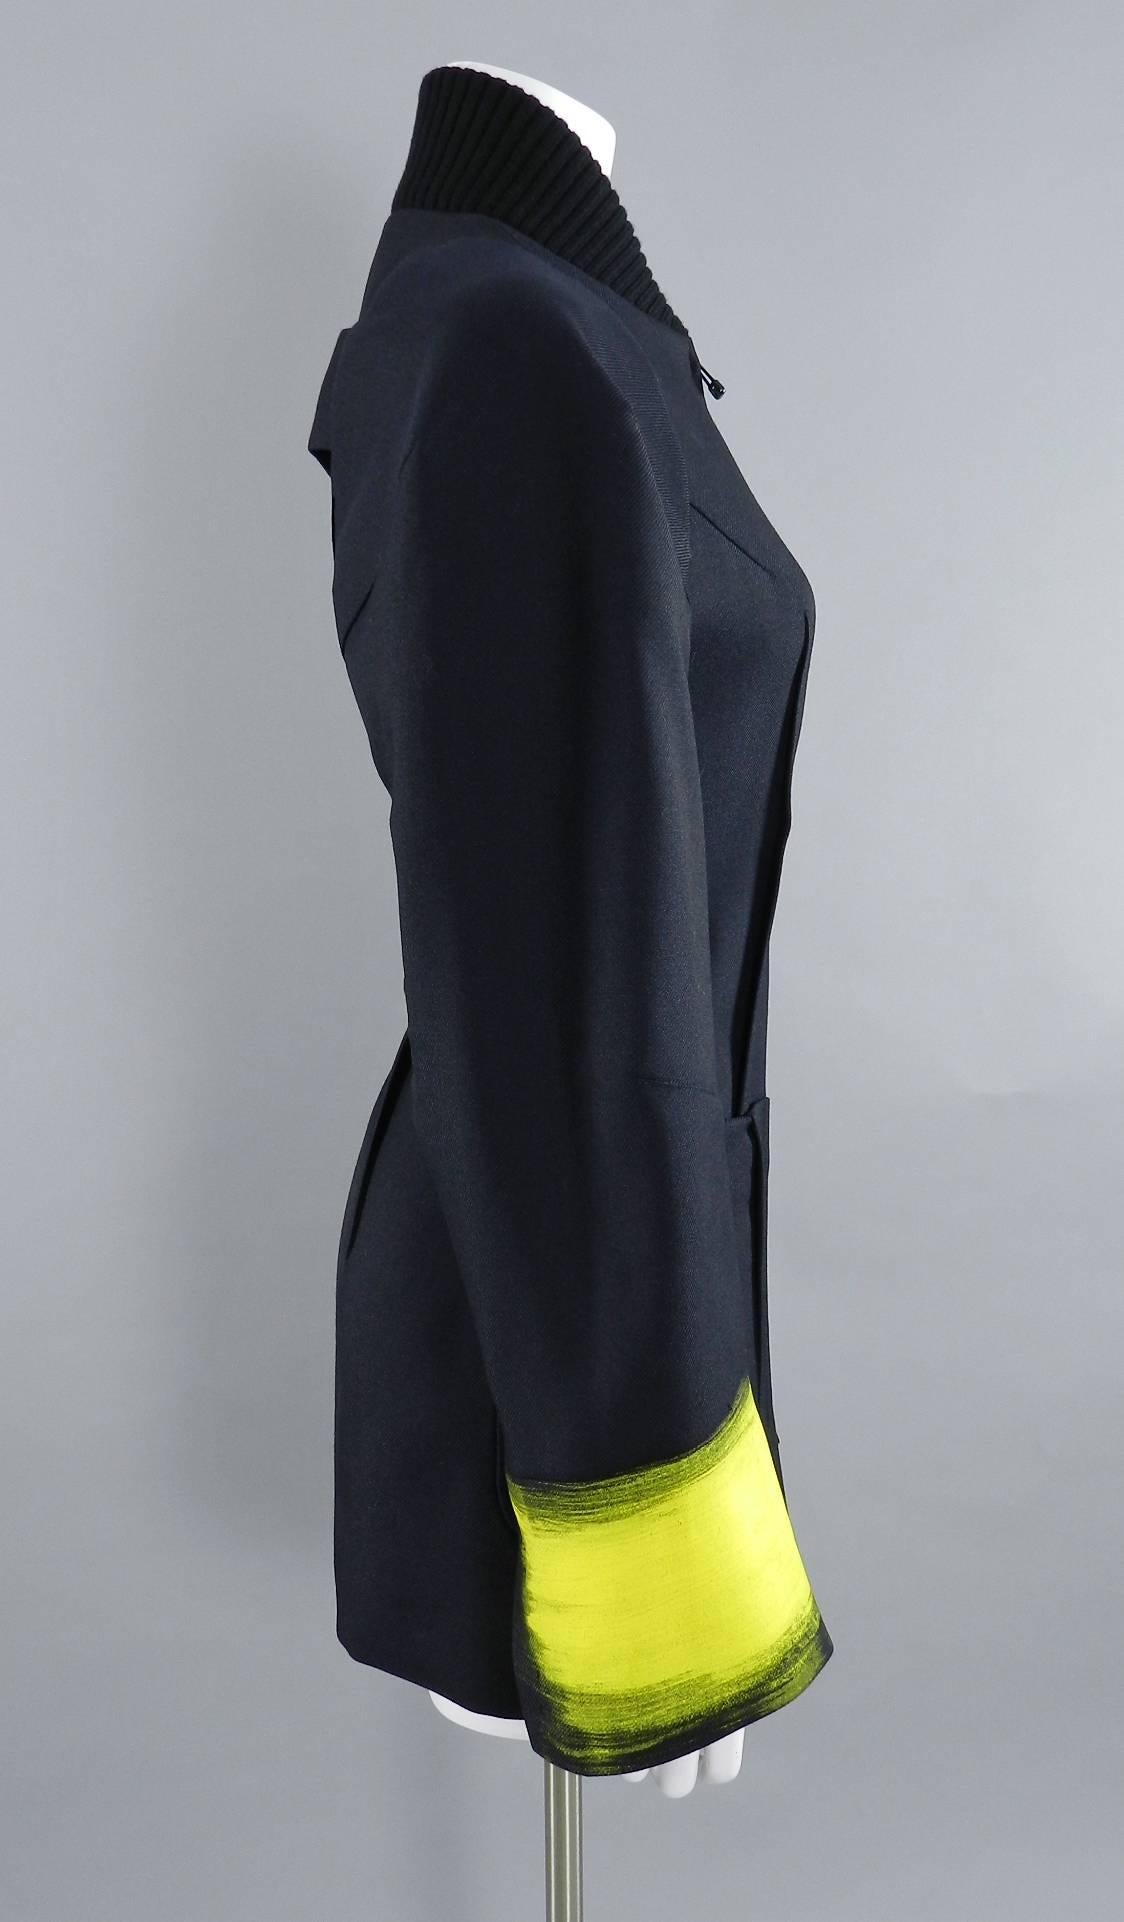 Women's Maison Martin Margiela Fall 2013 Runway Black Jacket with Yellow Painted Cuffs